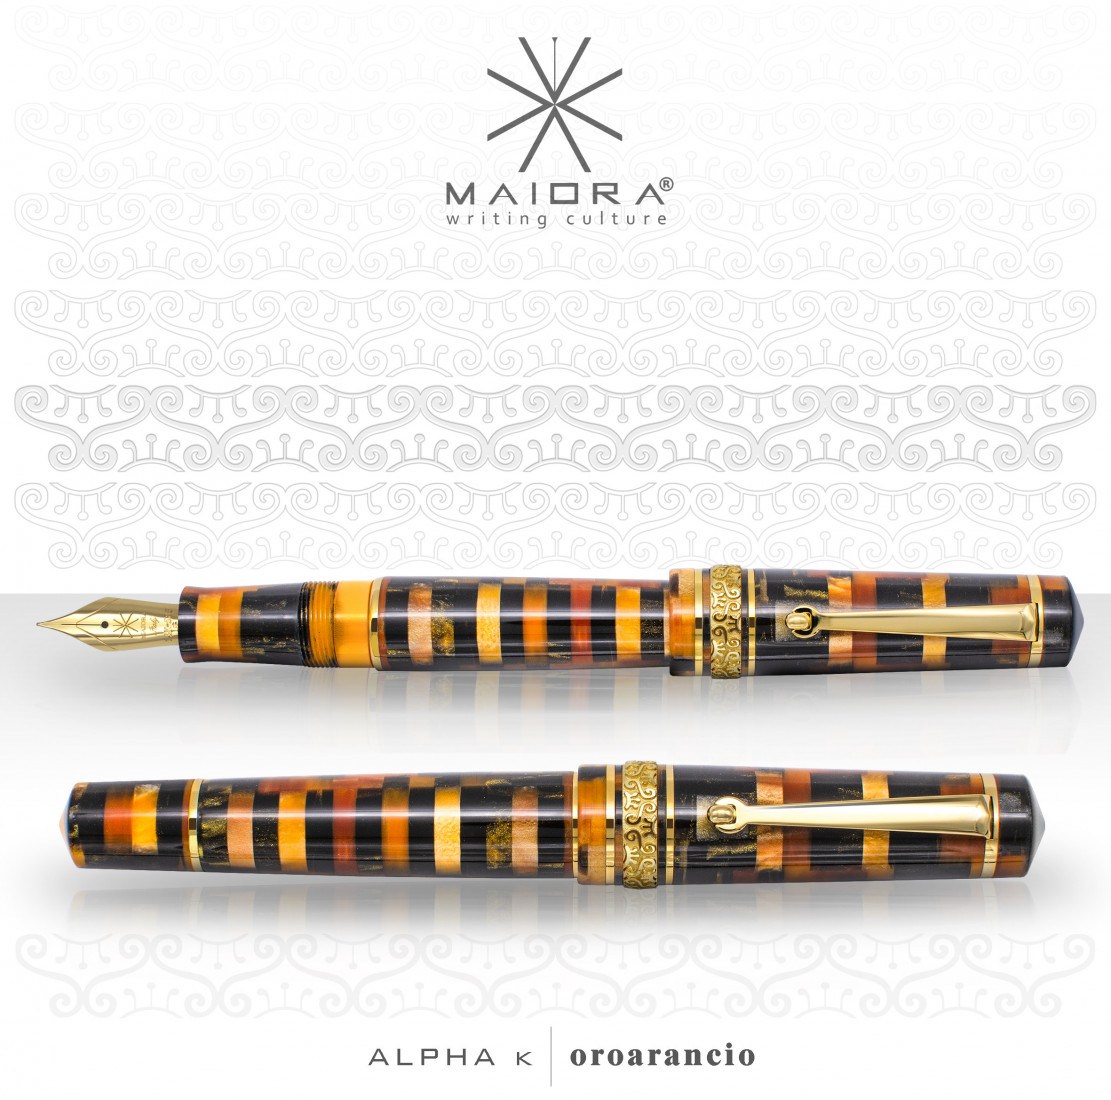 Maiora Alpha Oroarancio limited edition fountain pen